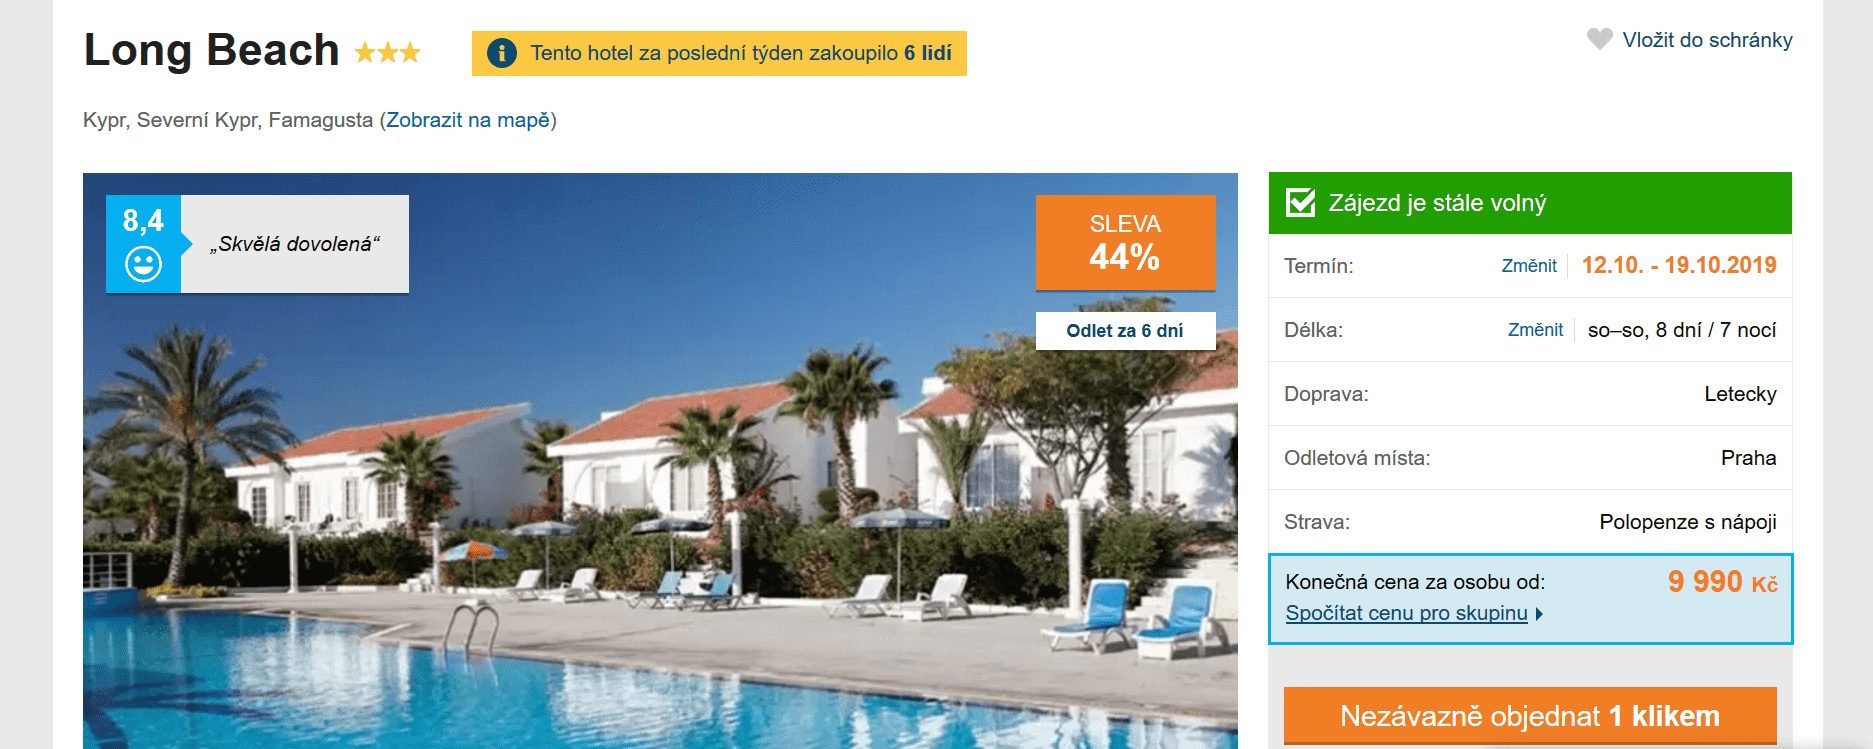 Zájezd Kypr (hotel Long Beach)